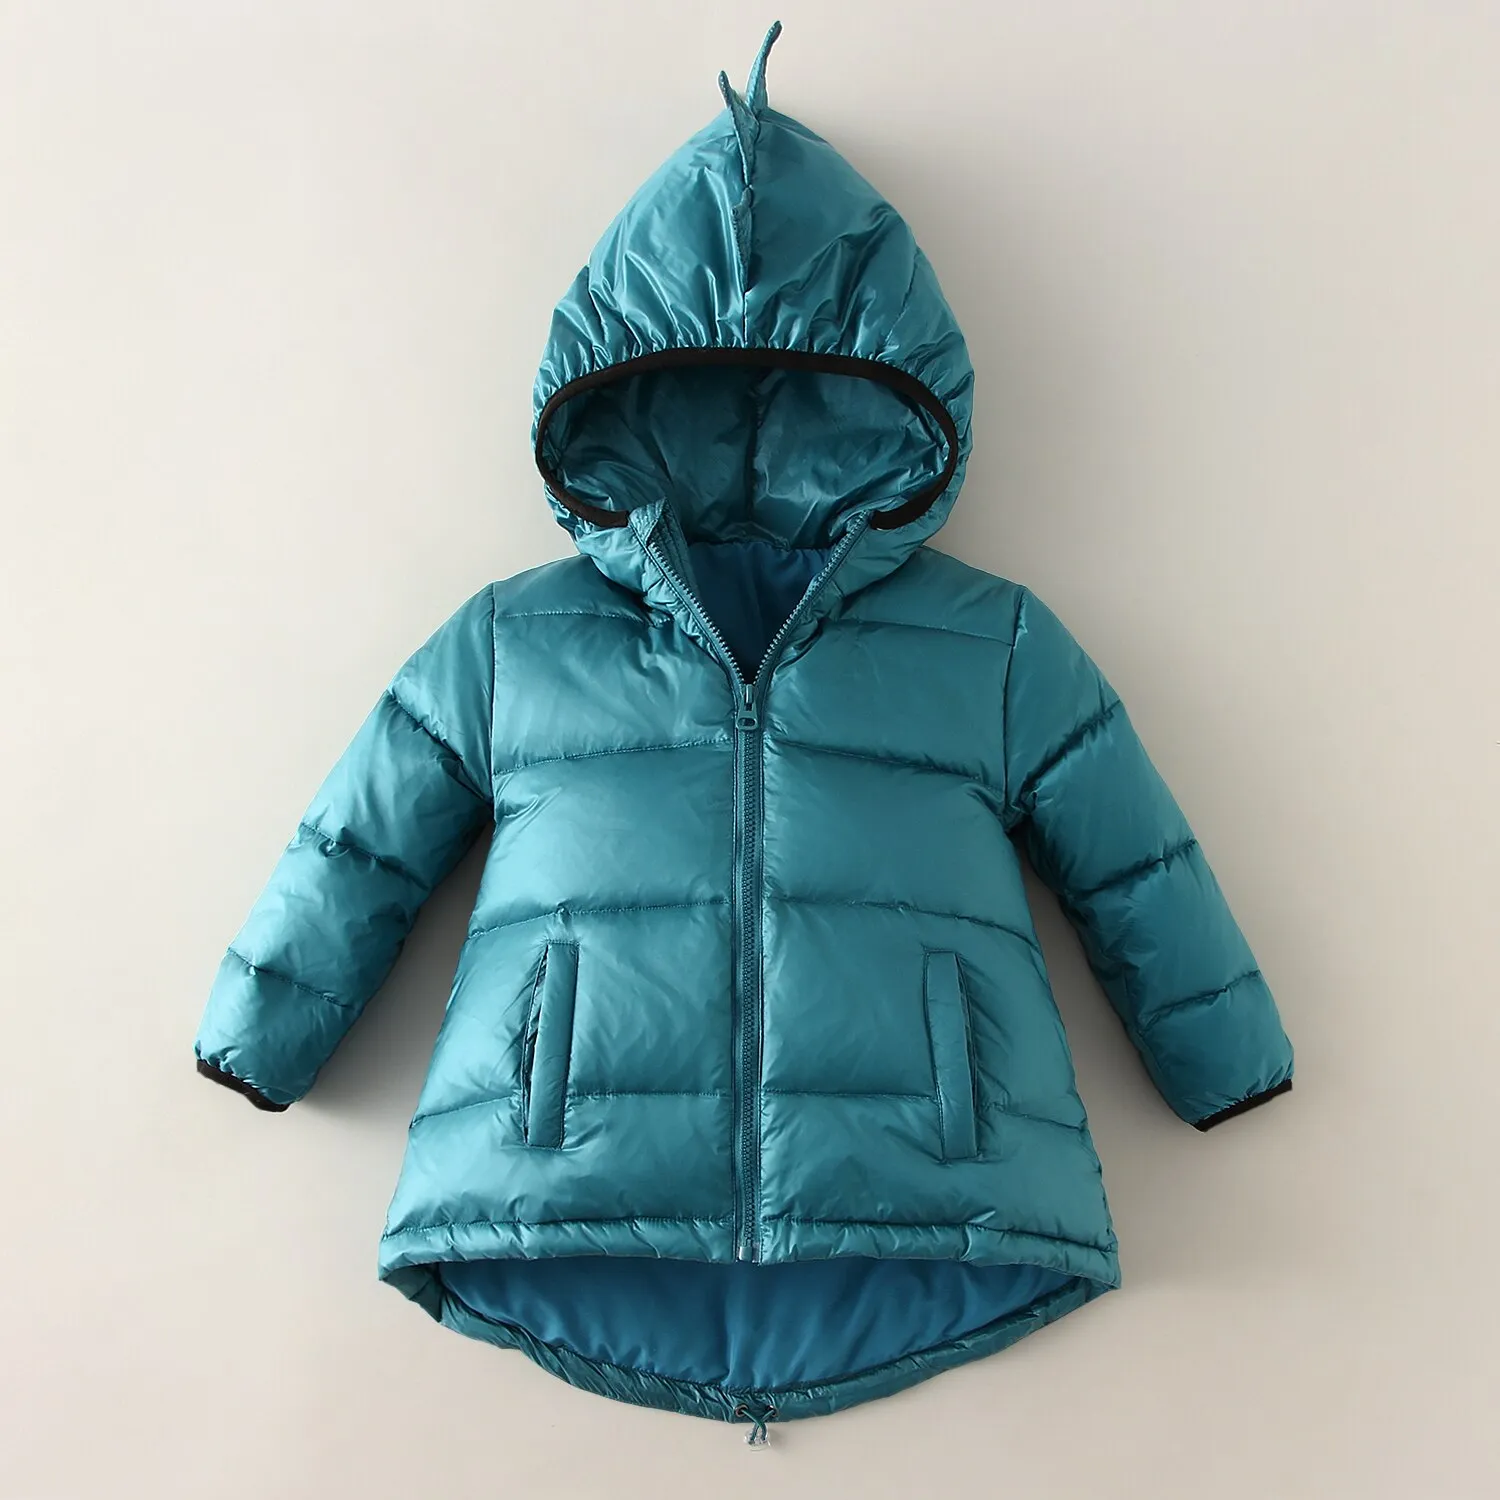 Parka de invierno para niños, abrigo de plumón, chaqueta impermeable a prueba viento, gruesa, cálida, Parkas | Miravia